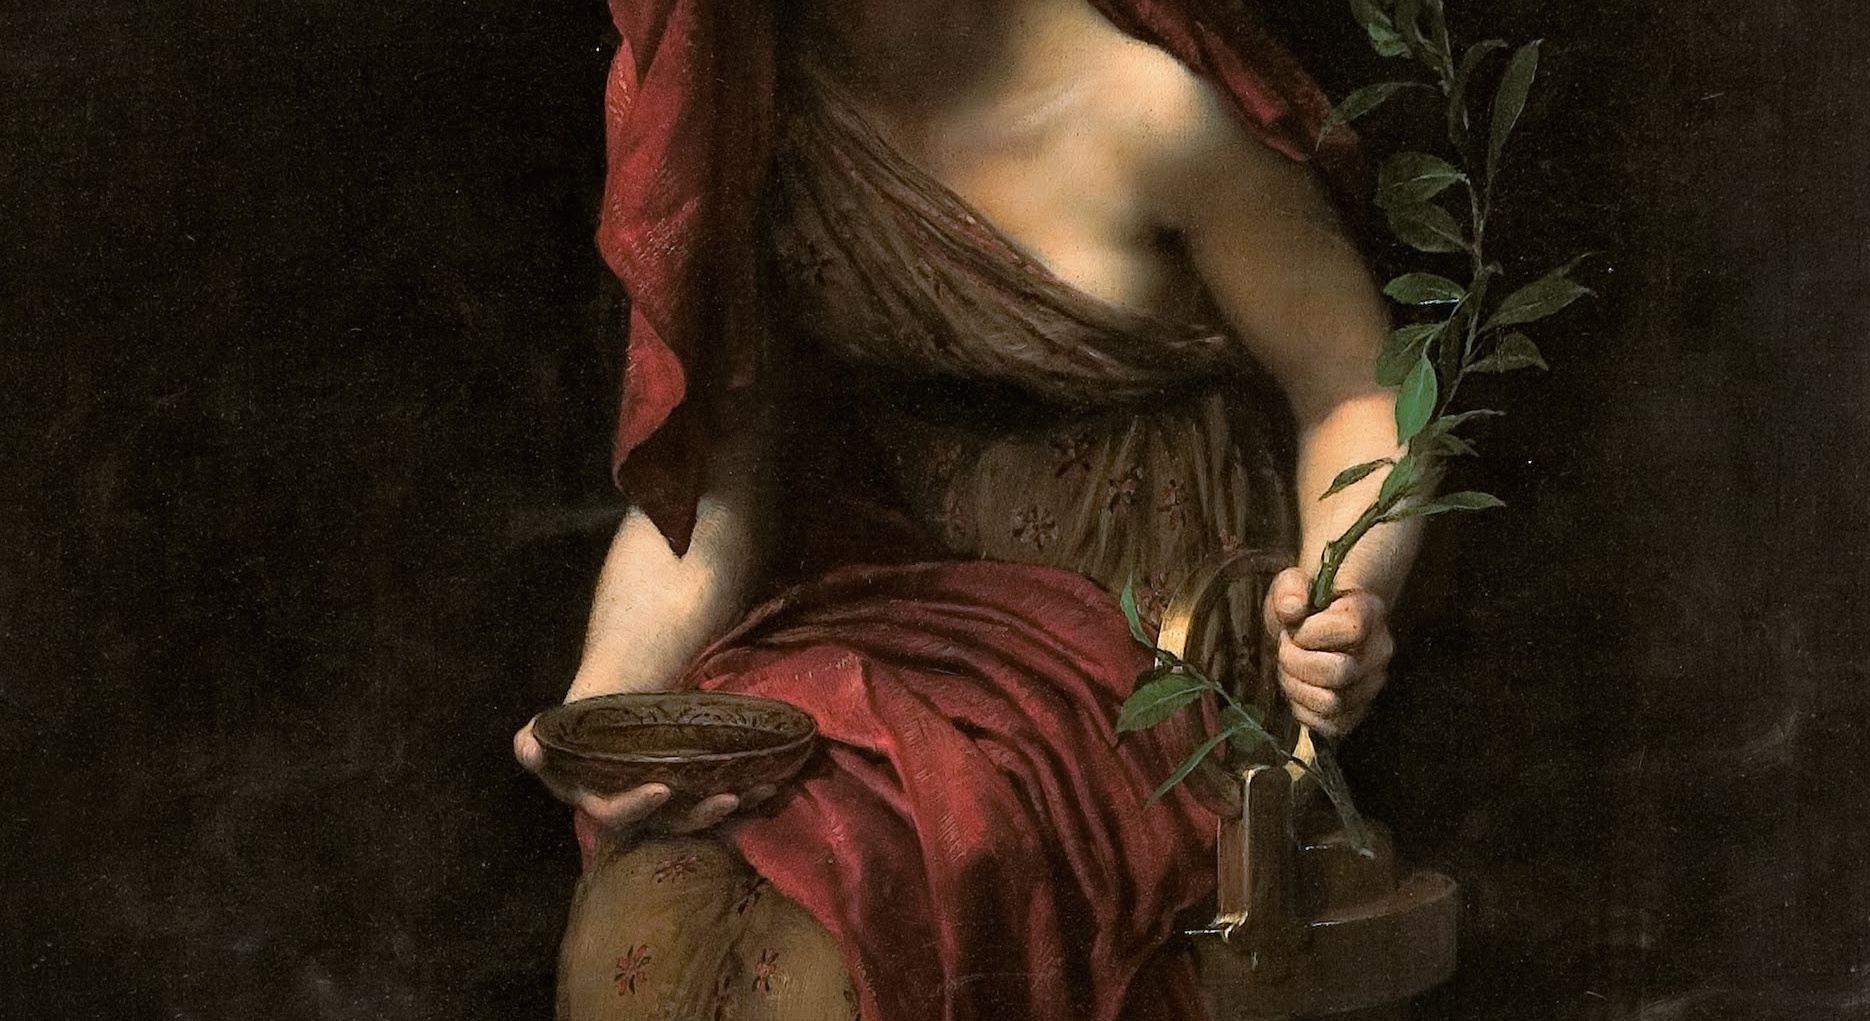 priestess of delphi detail, her hands and torso